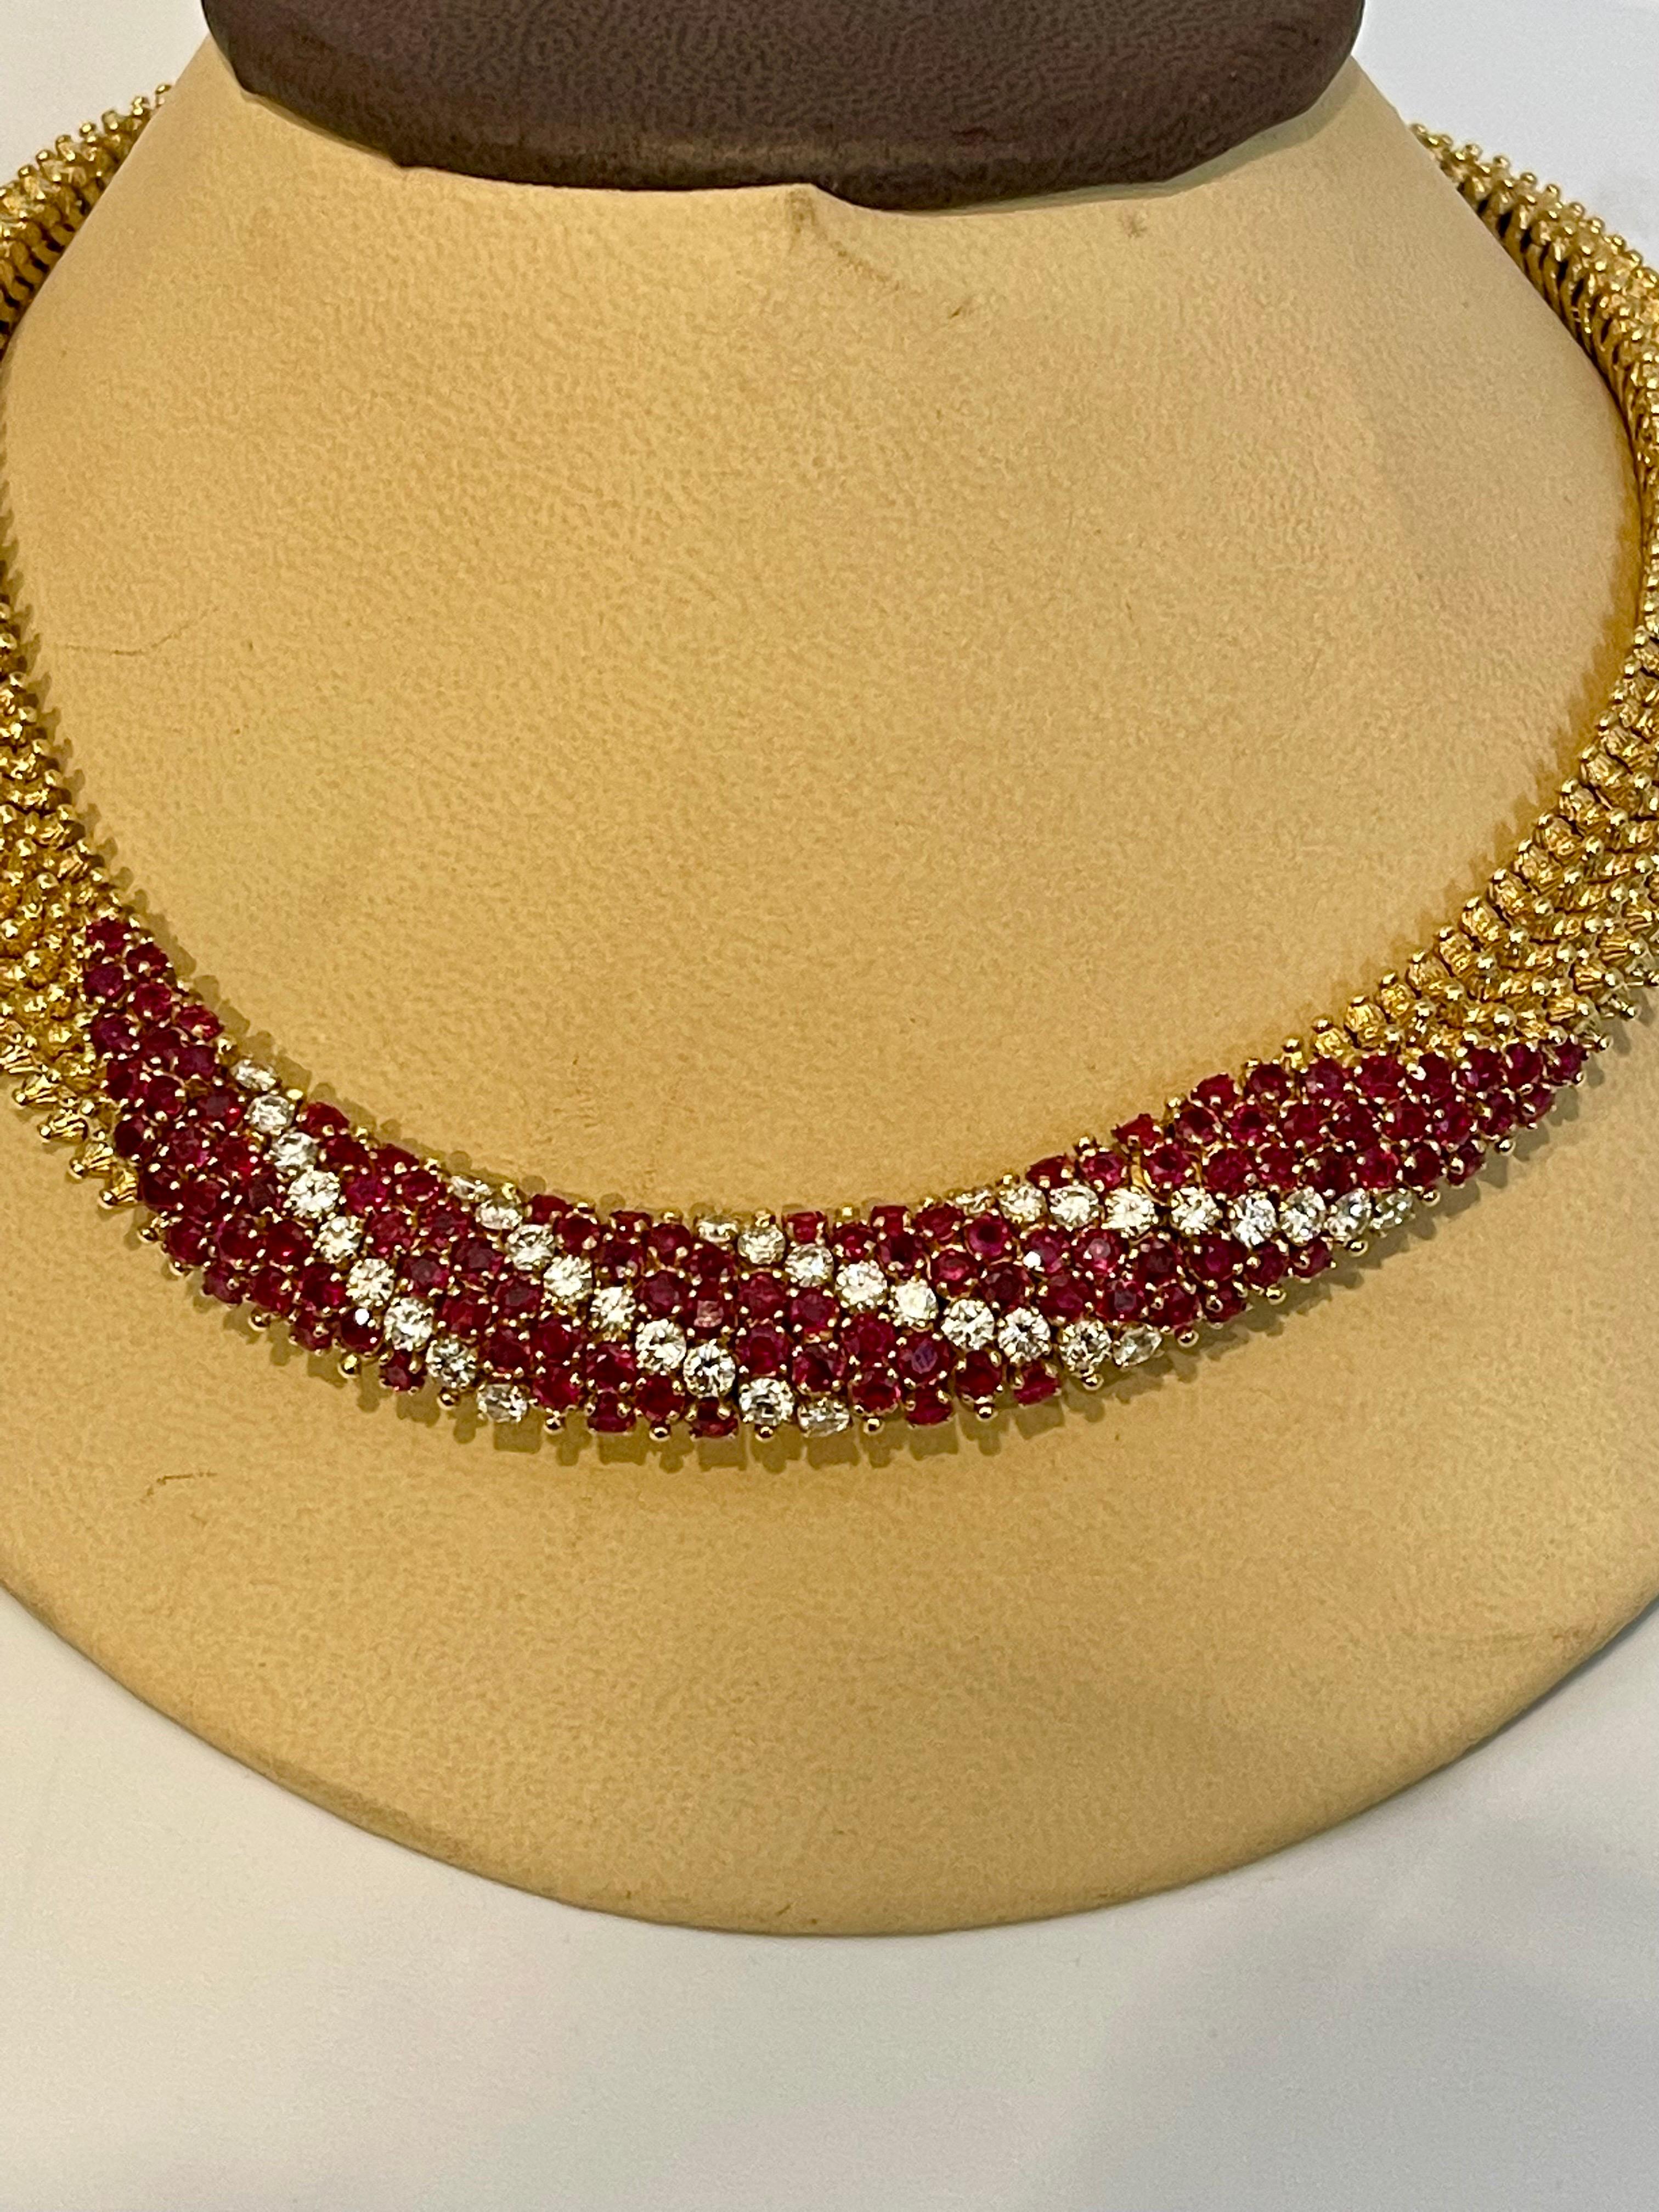 Natural 12 Ct Burma Ruby and 5 Ct Diamond Necklace 18 Karat Yellow Gold 166gm  3